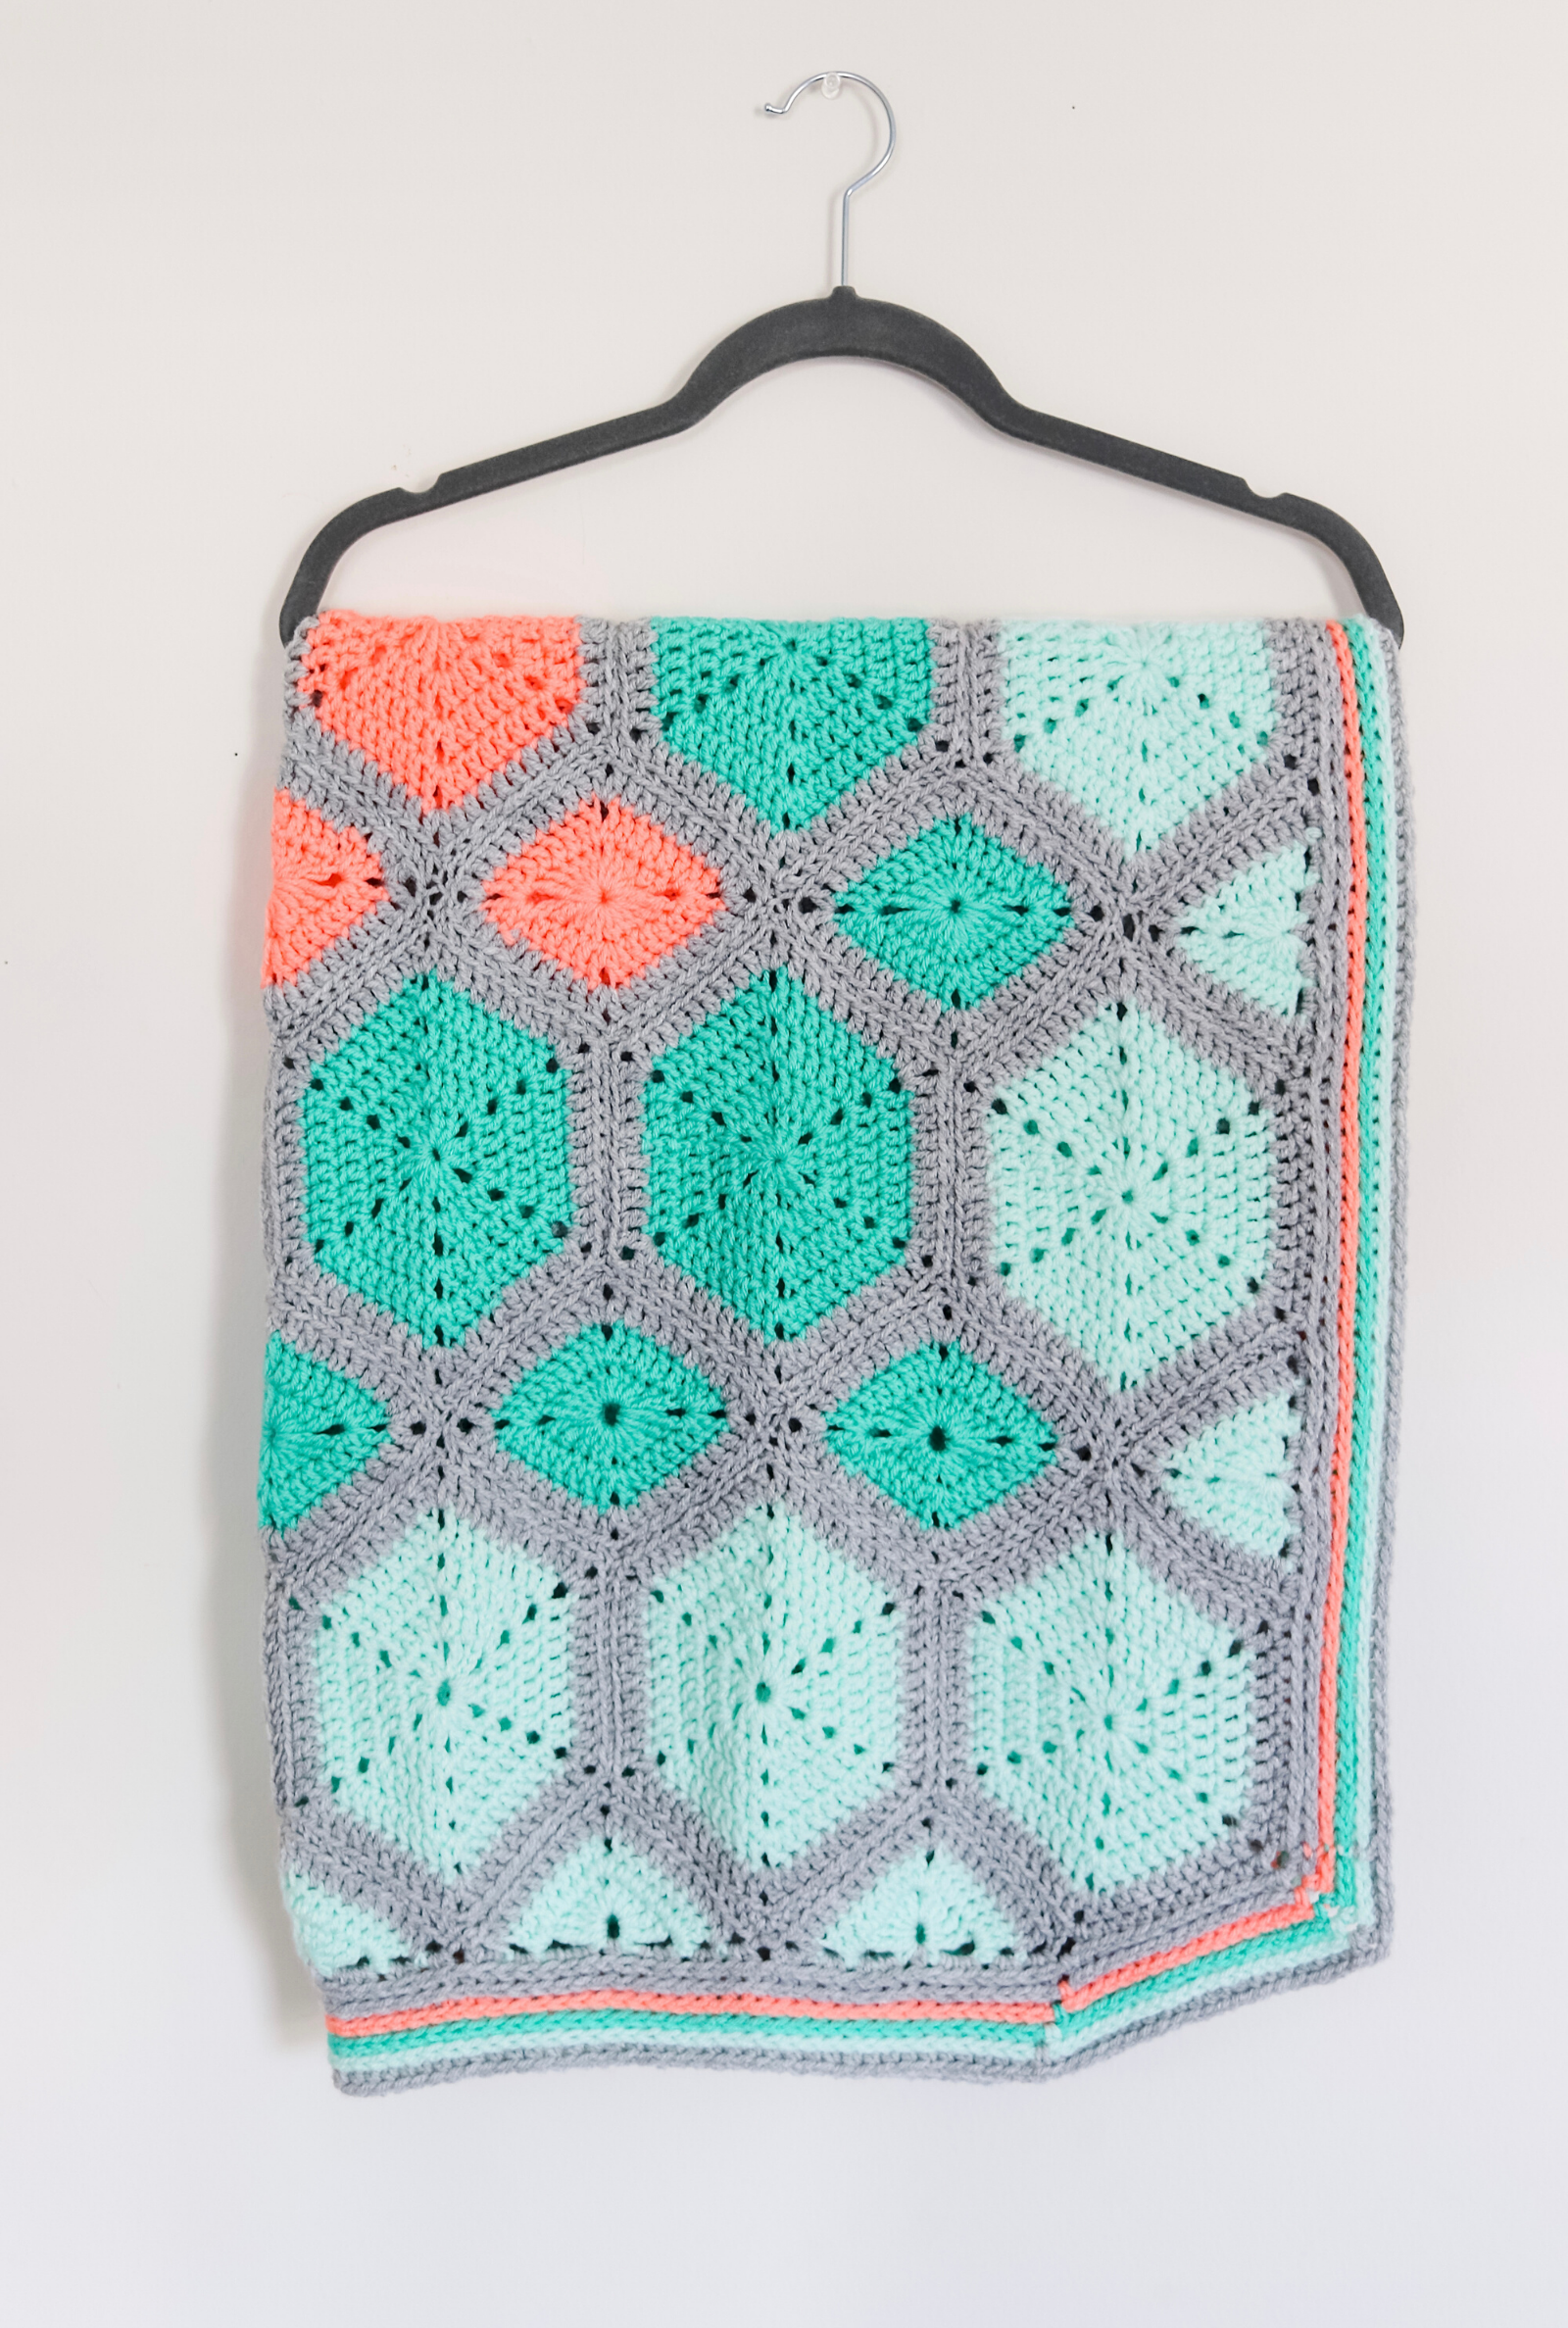 Hexis In Springtime // Crochet PDF Pattern